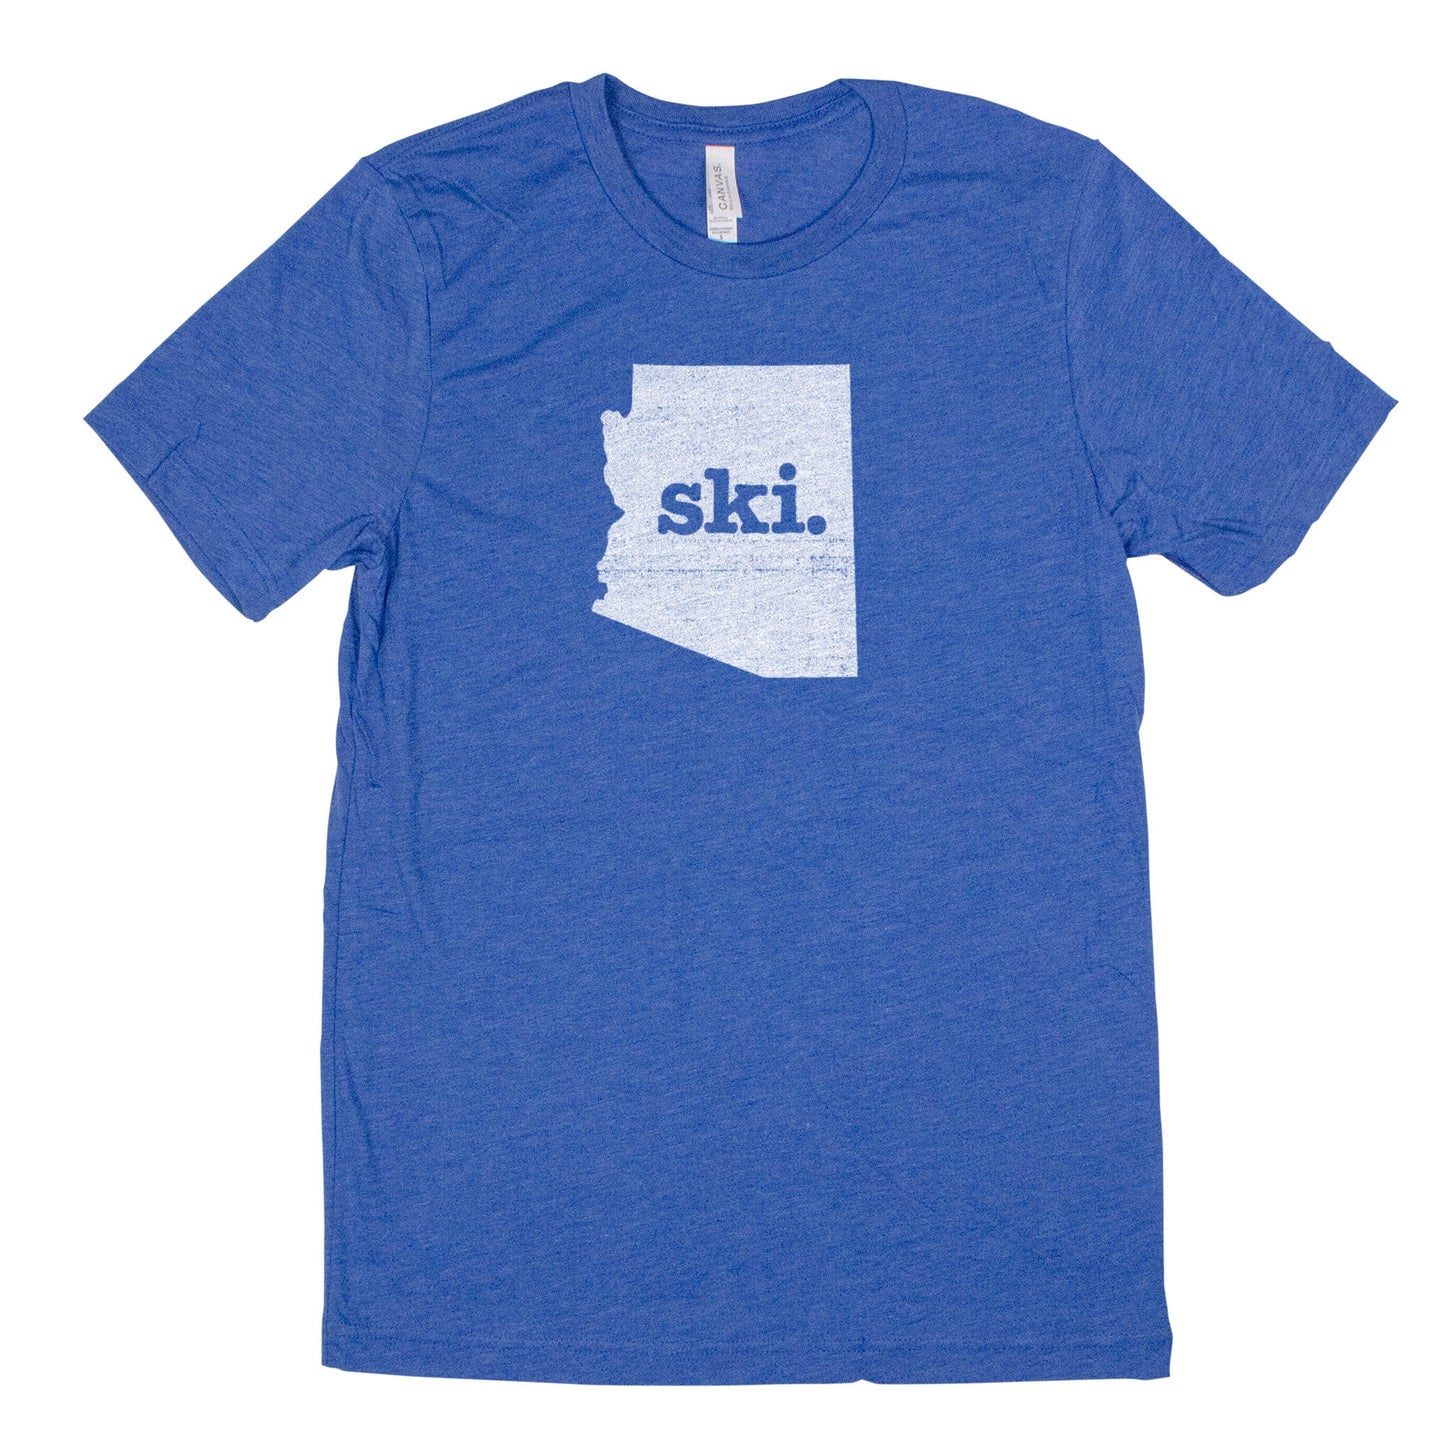 ski. Men's Unisex T-Shirt - Arizona